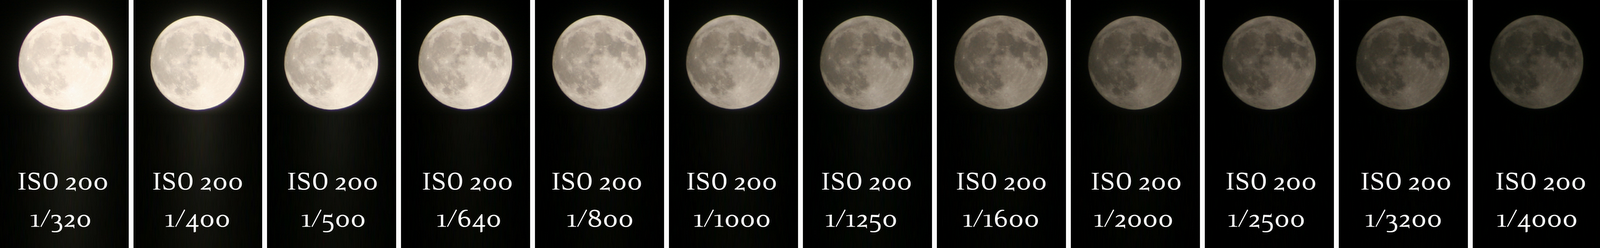 full moon photography exposure chart